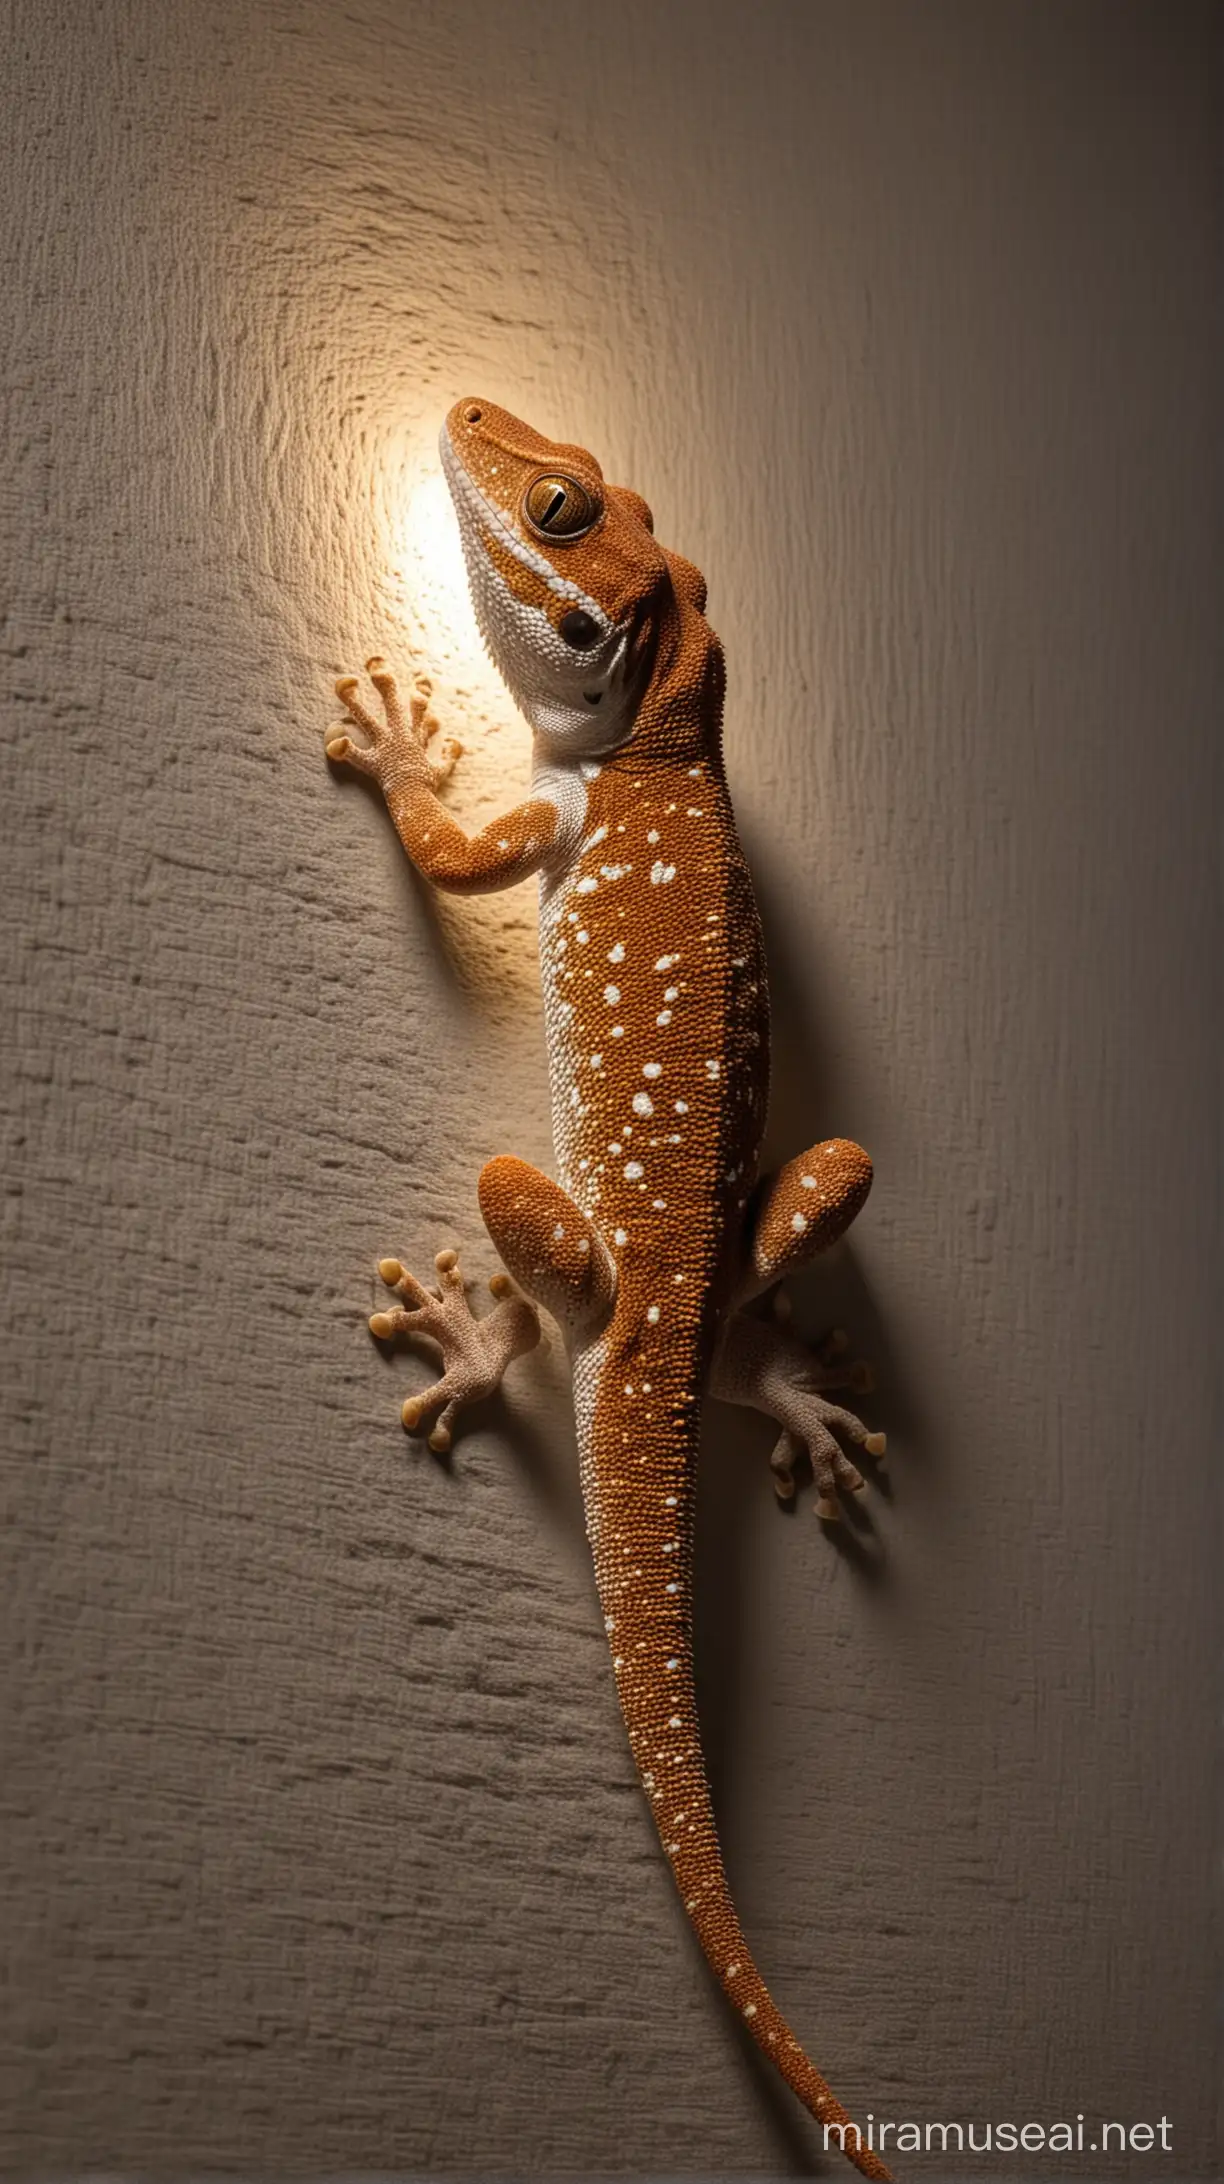 make a gecko on the wall at night, image quality like an award-winning image.